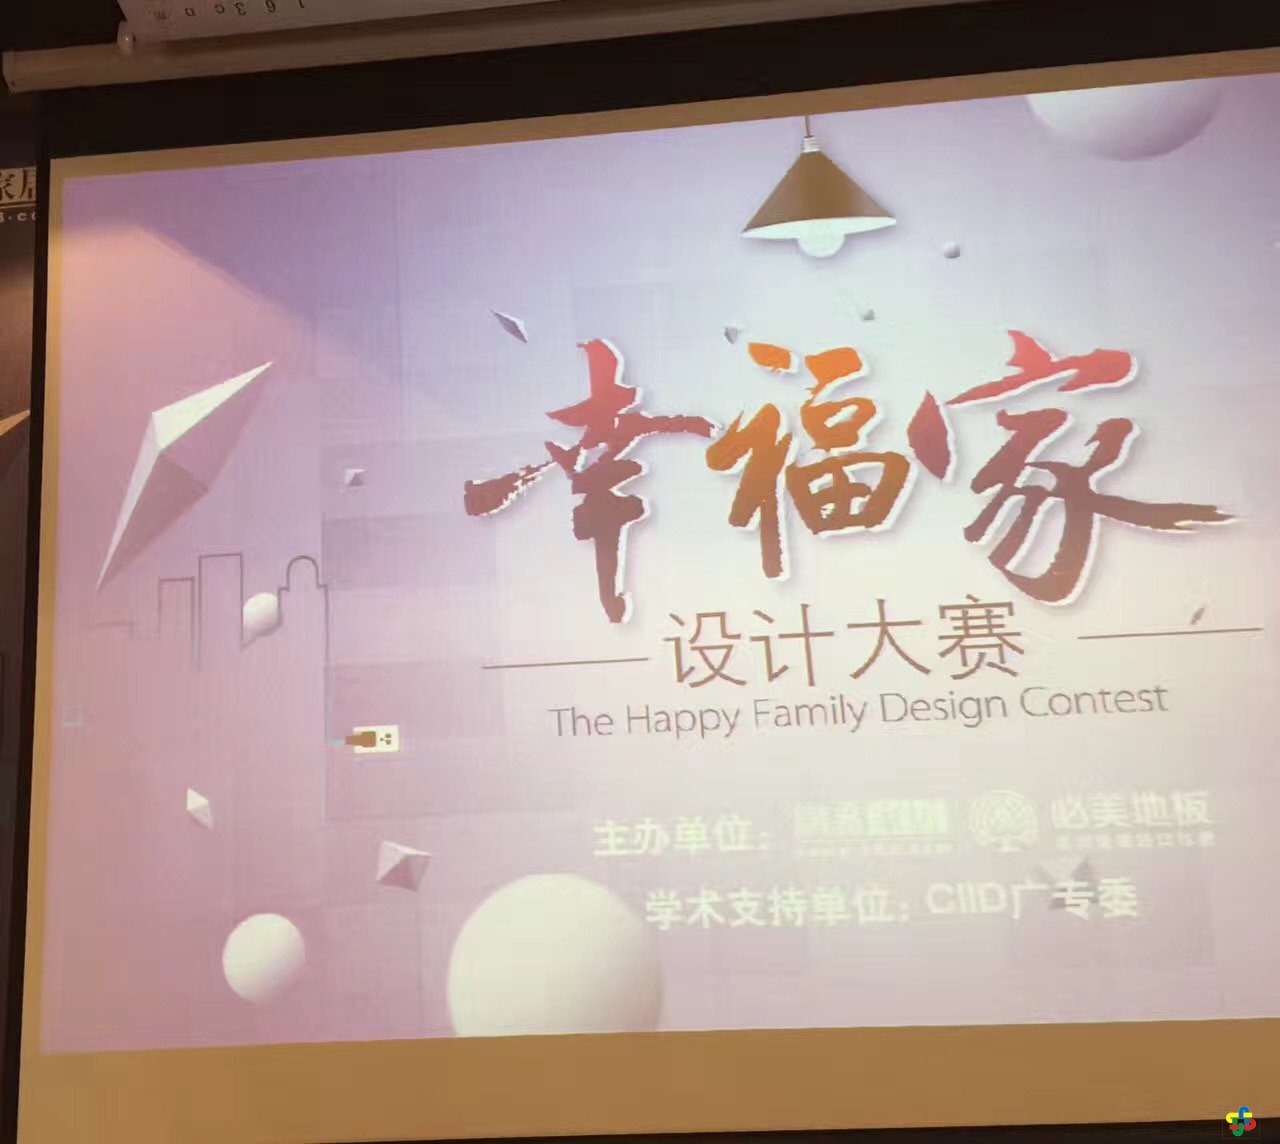 [CIID]广州专委会学术支持“幸福家”公益设计大赛